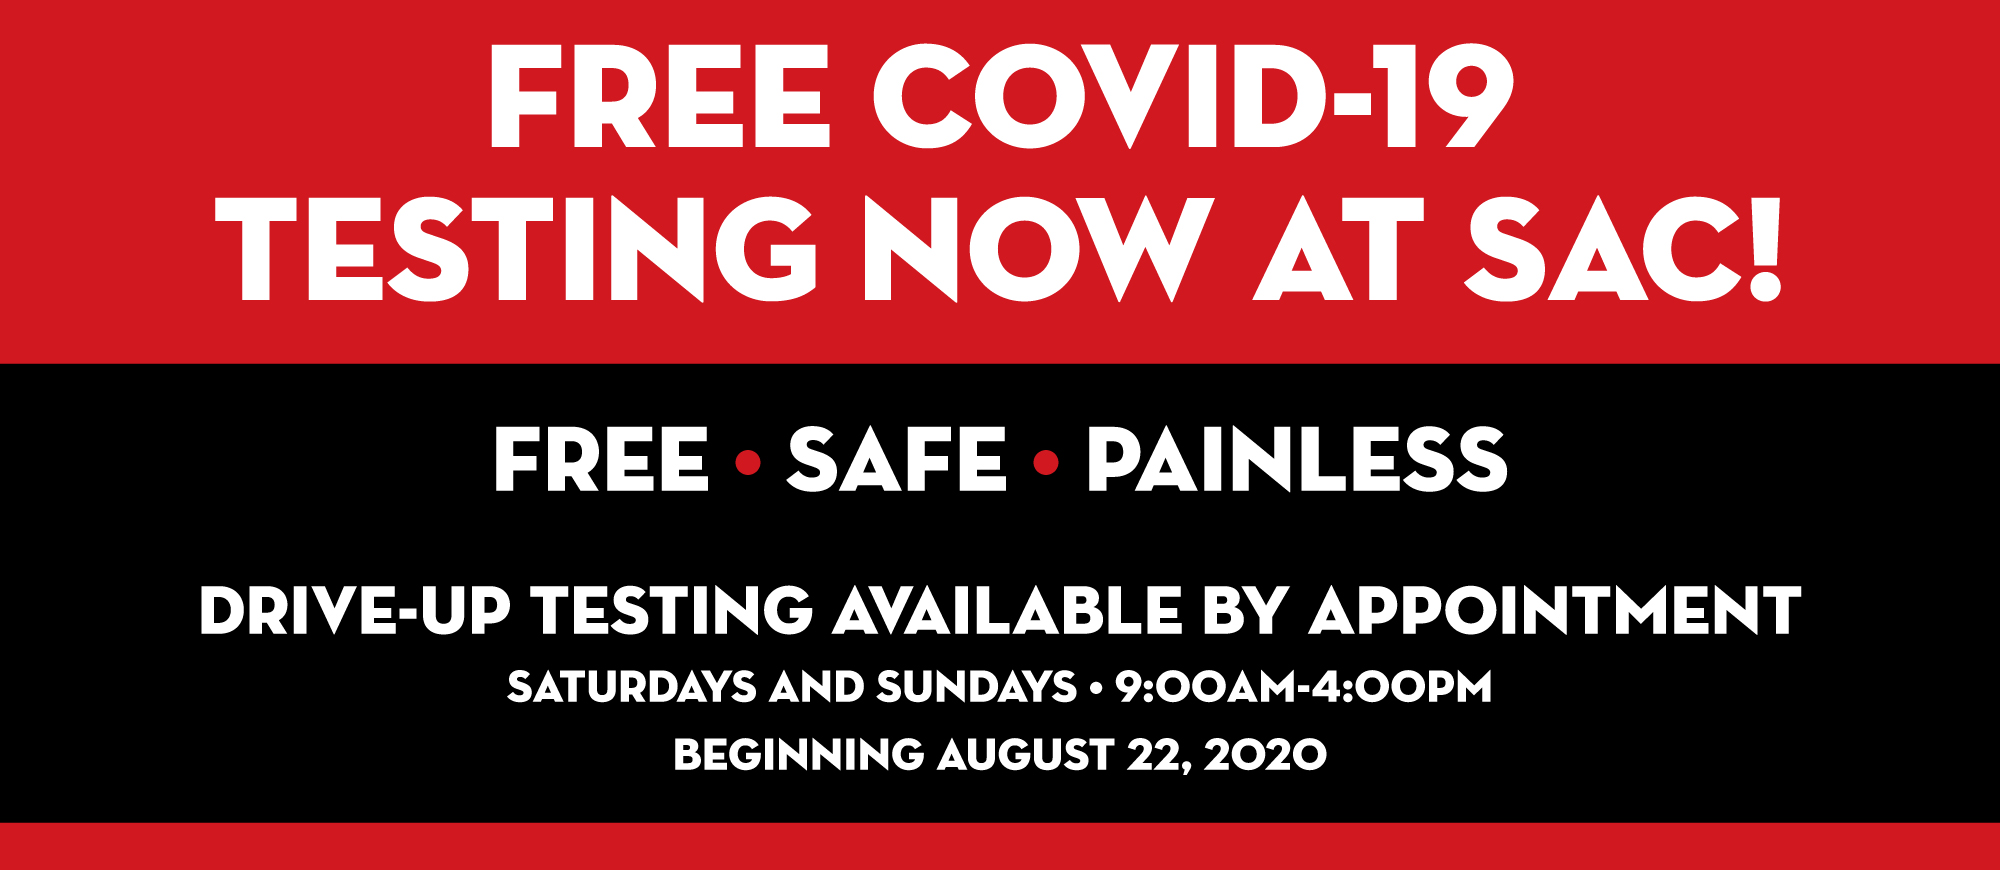 Free Covid-19 Testing now at SAC!